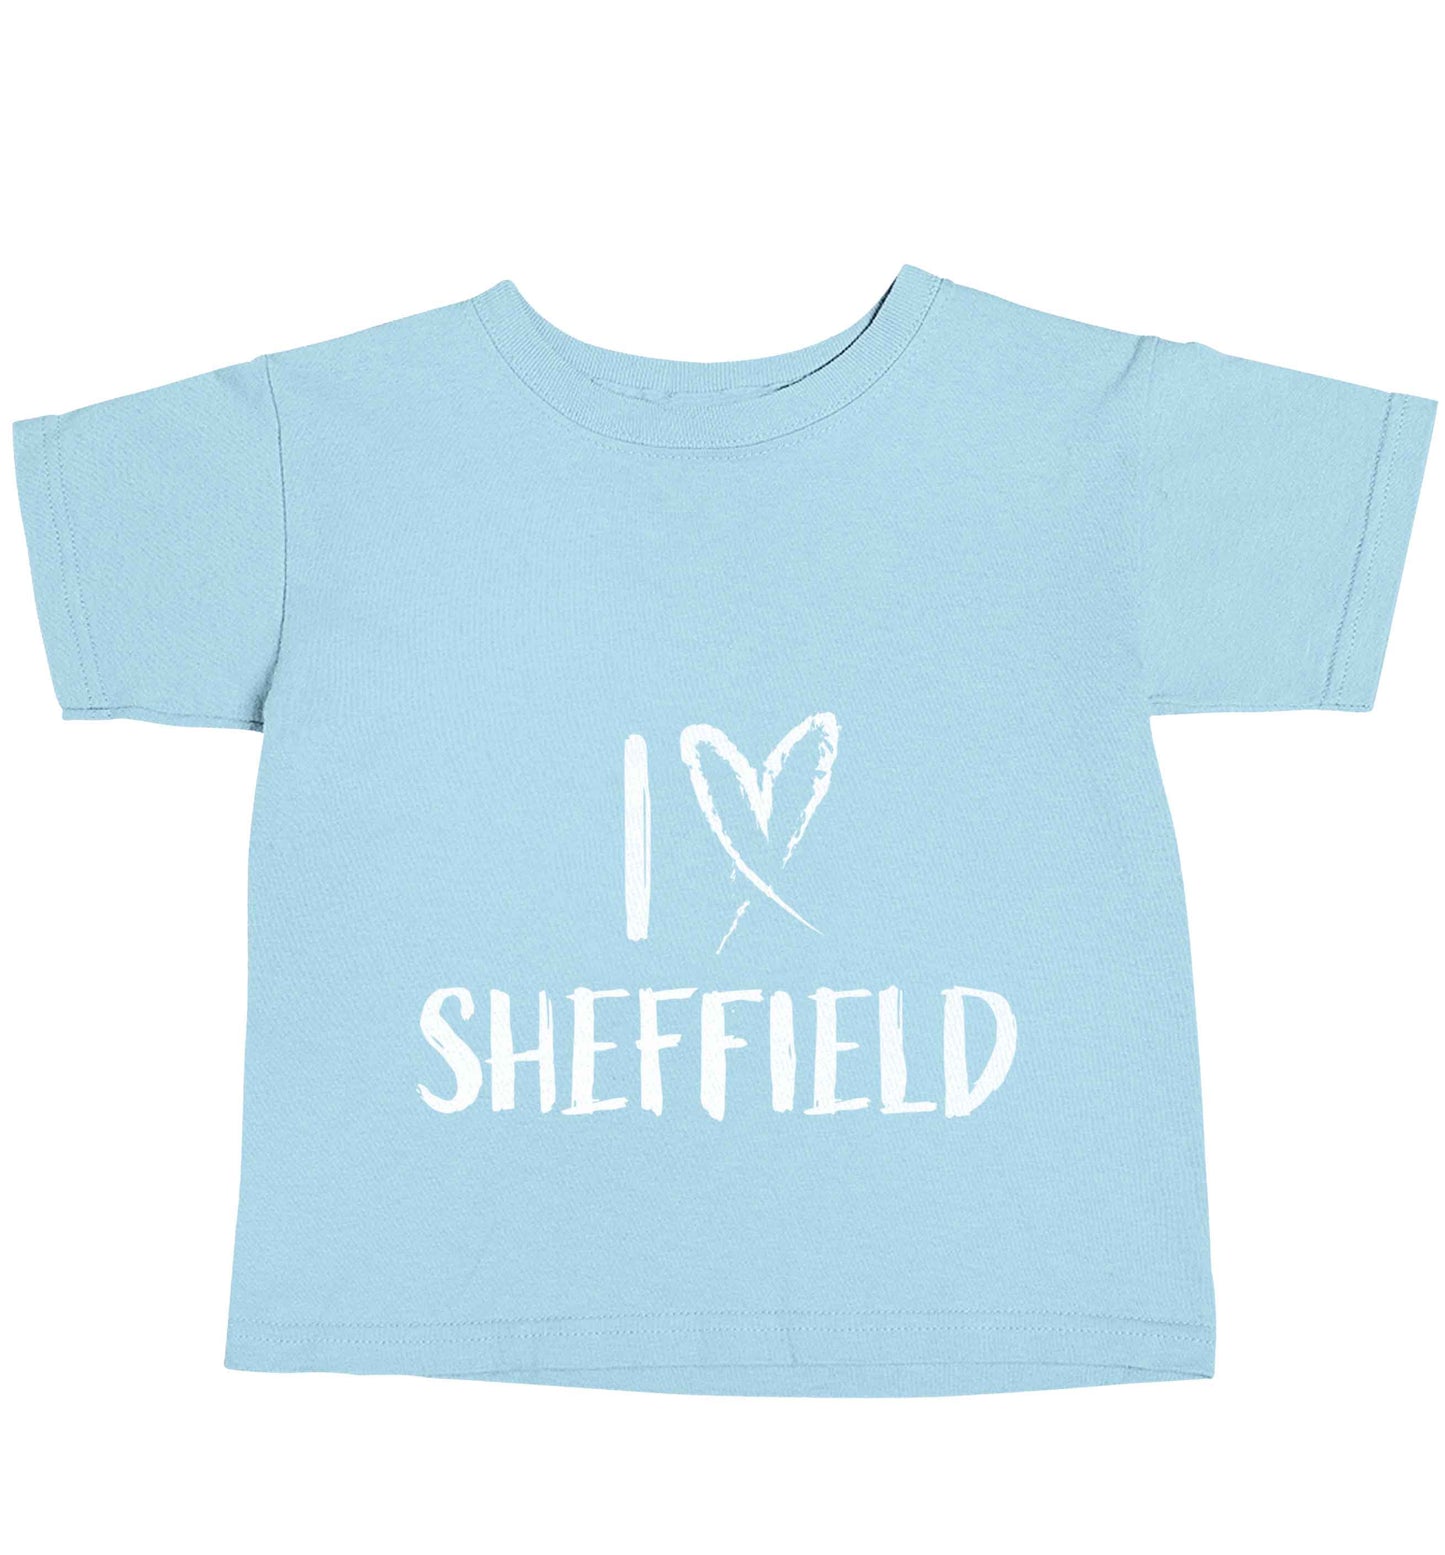 I love Sheffield light blue baby toddler Tshirt 2 Years